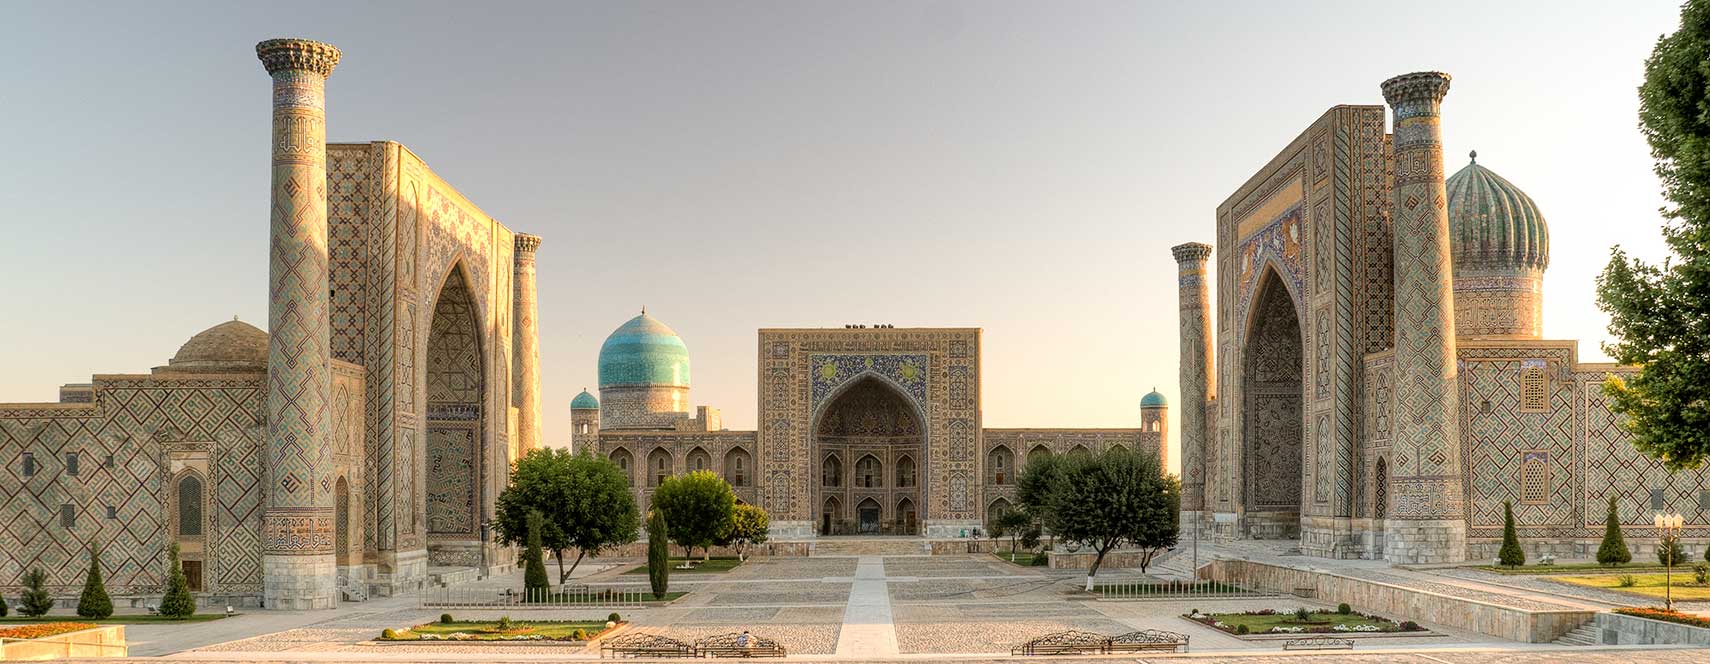 Samarkand-Uzbekistan